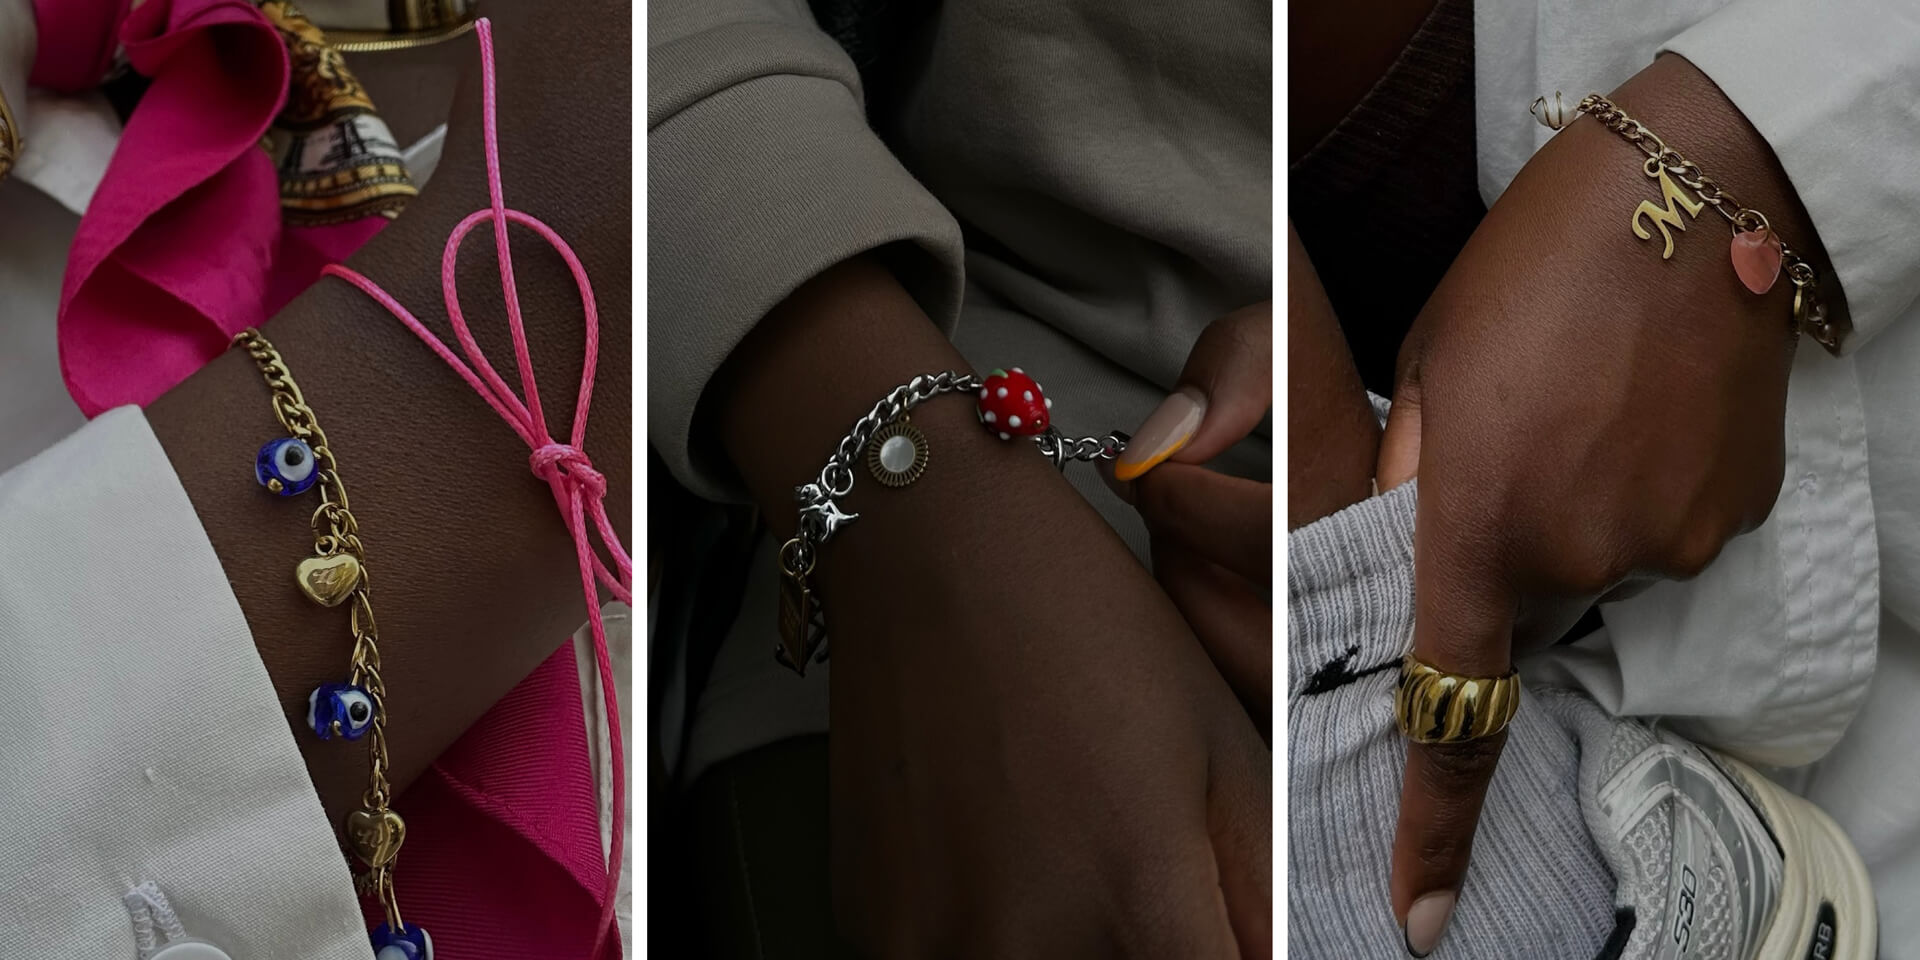 Pinkes Ribbon Armband mit Schleife, Armbänder mit Charms